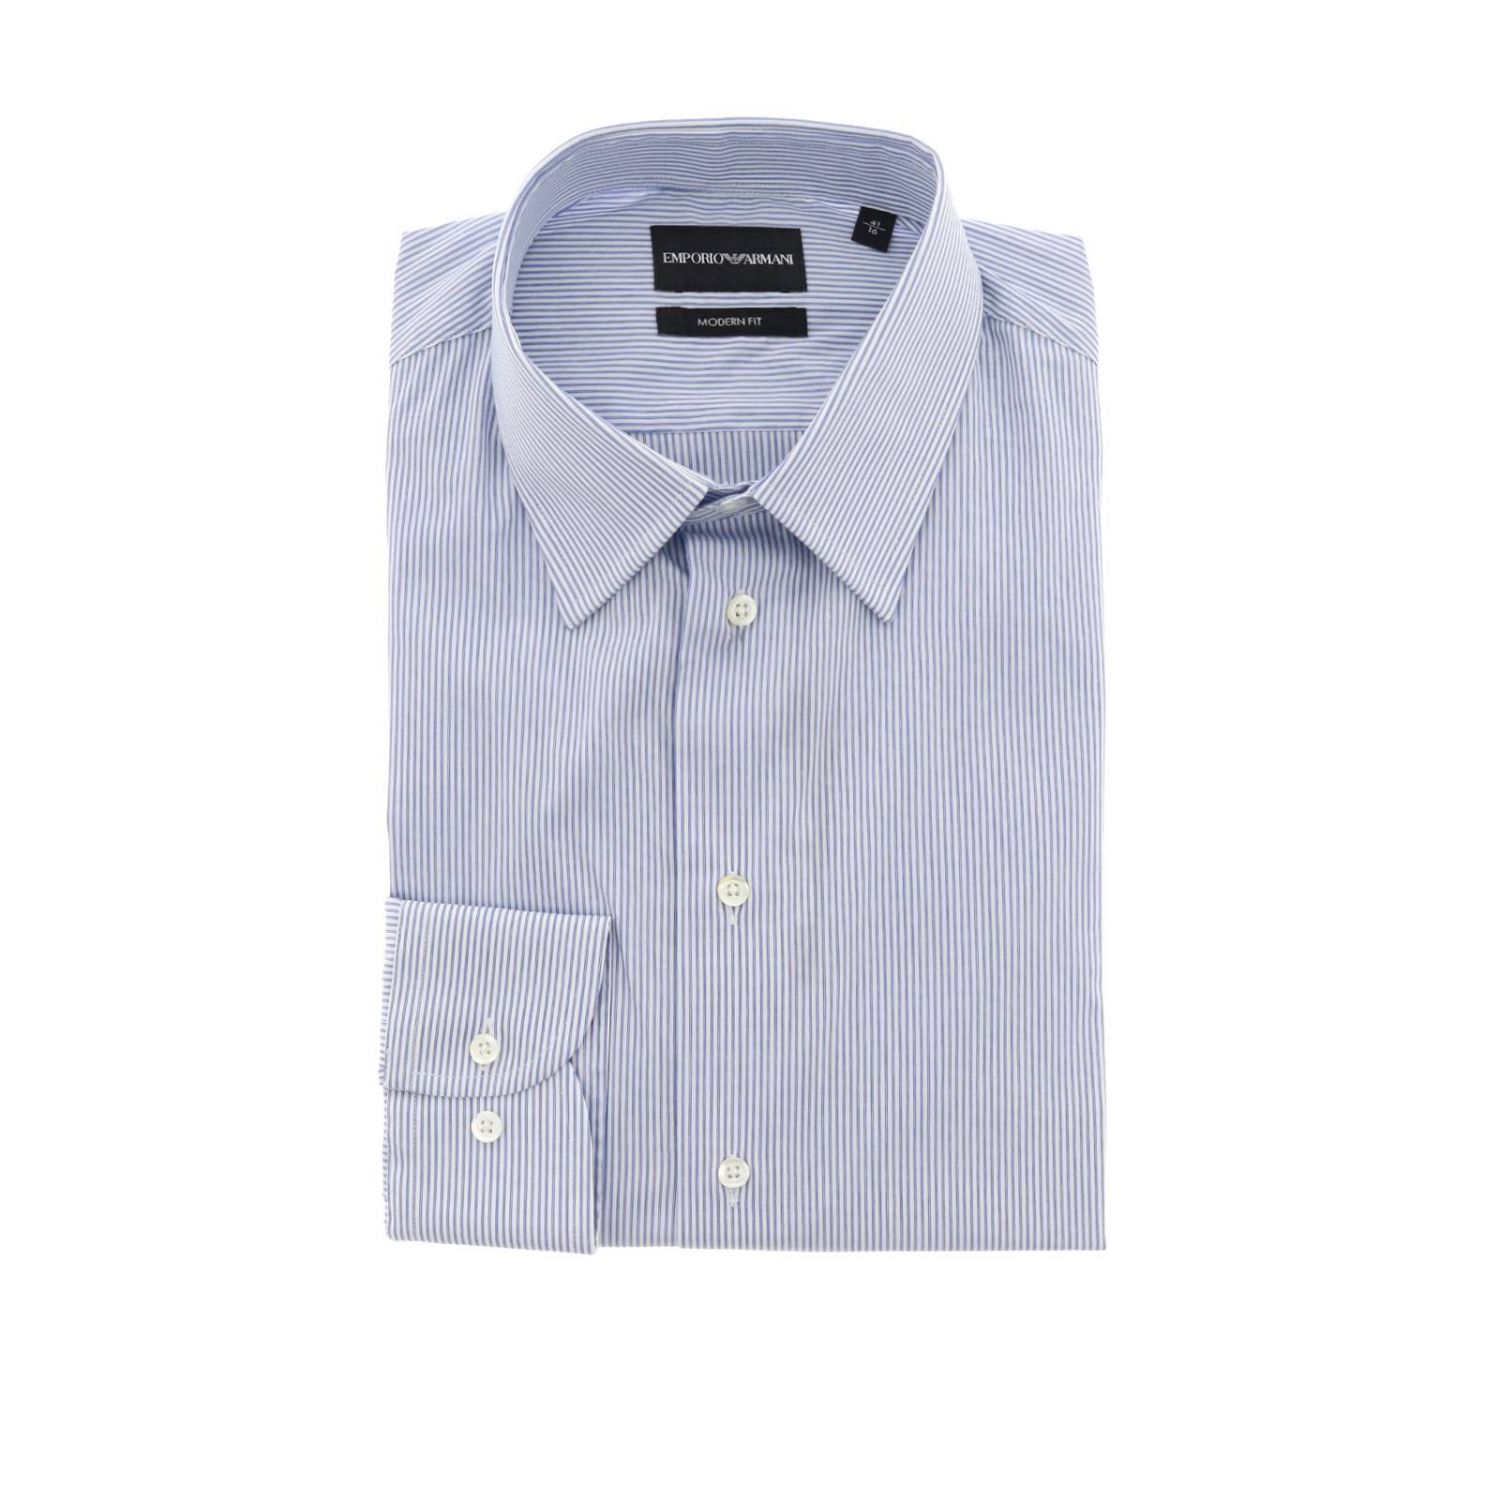 Emporio Armani Outlet: shirt for man - Blue | Emporio Armani shirt ...